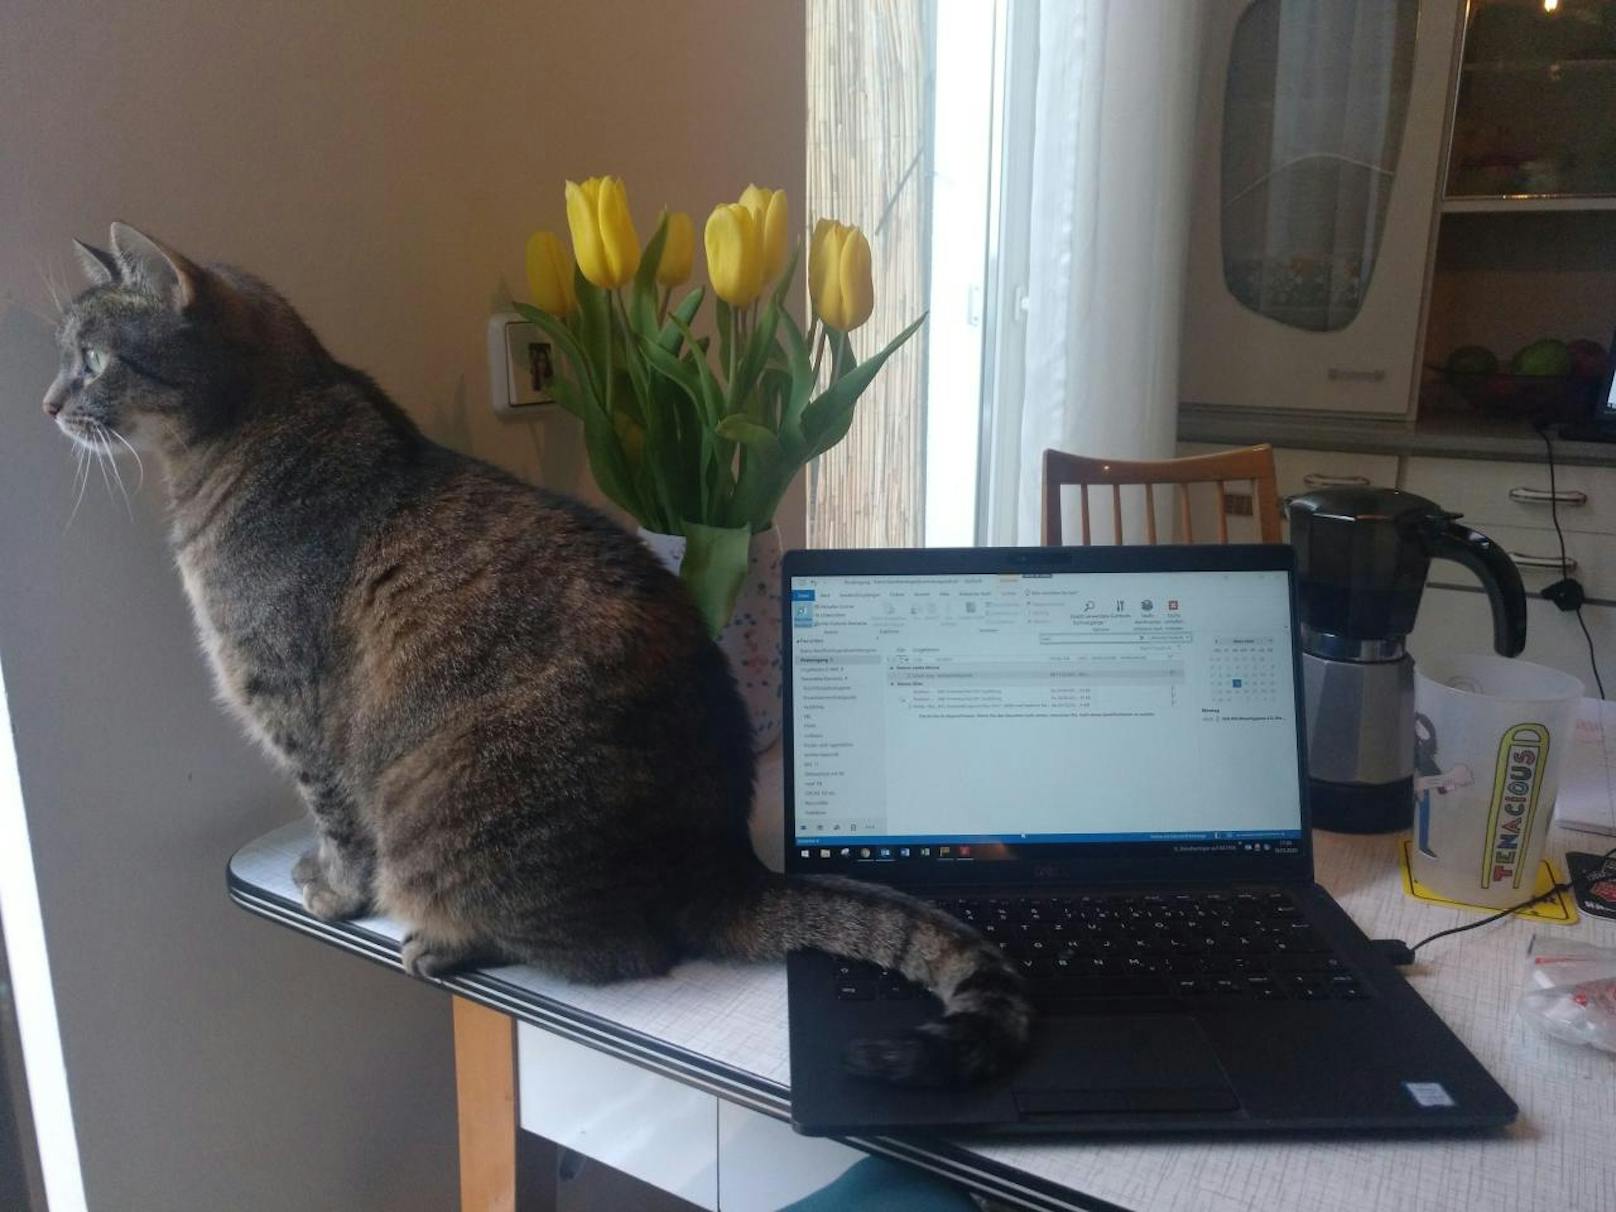 "Katzen lieben Home-Office! Grüße aus Wien"